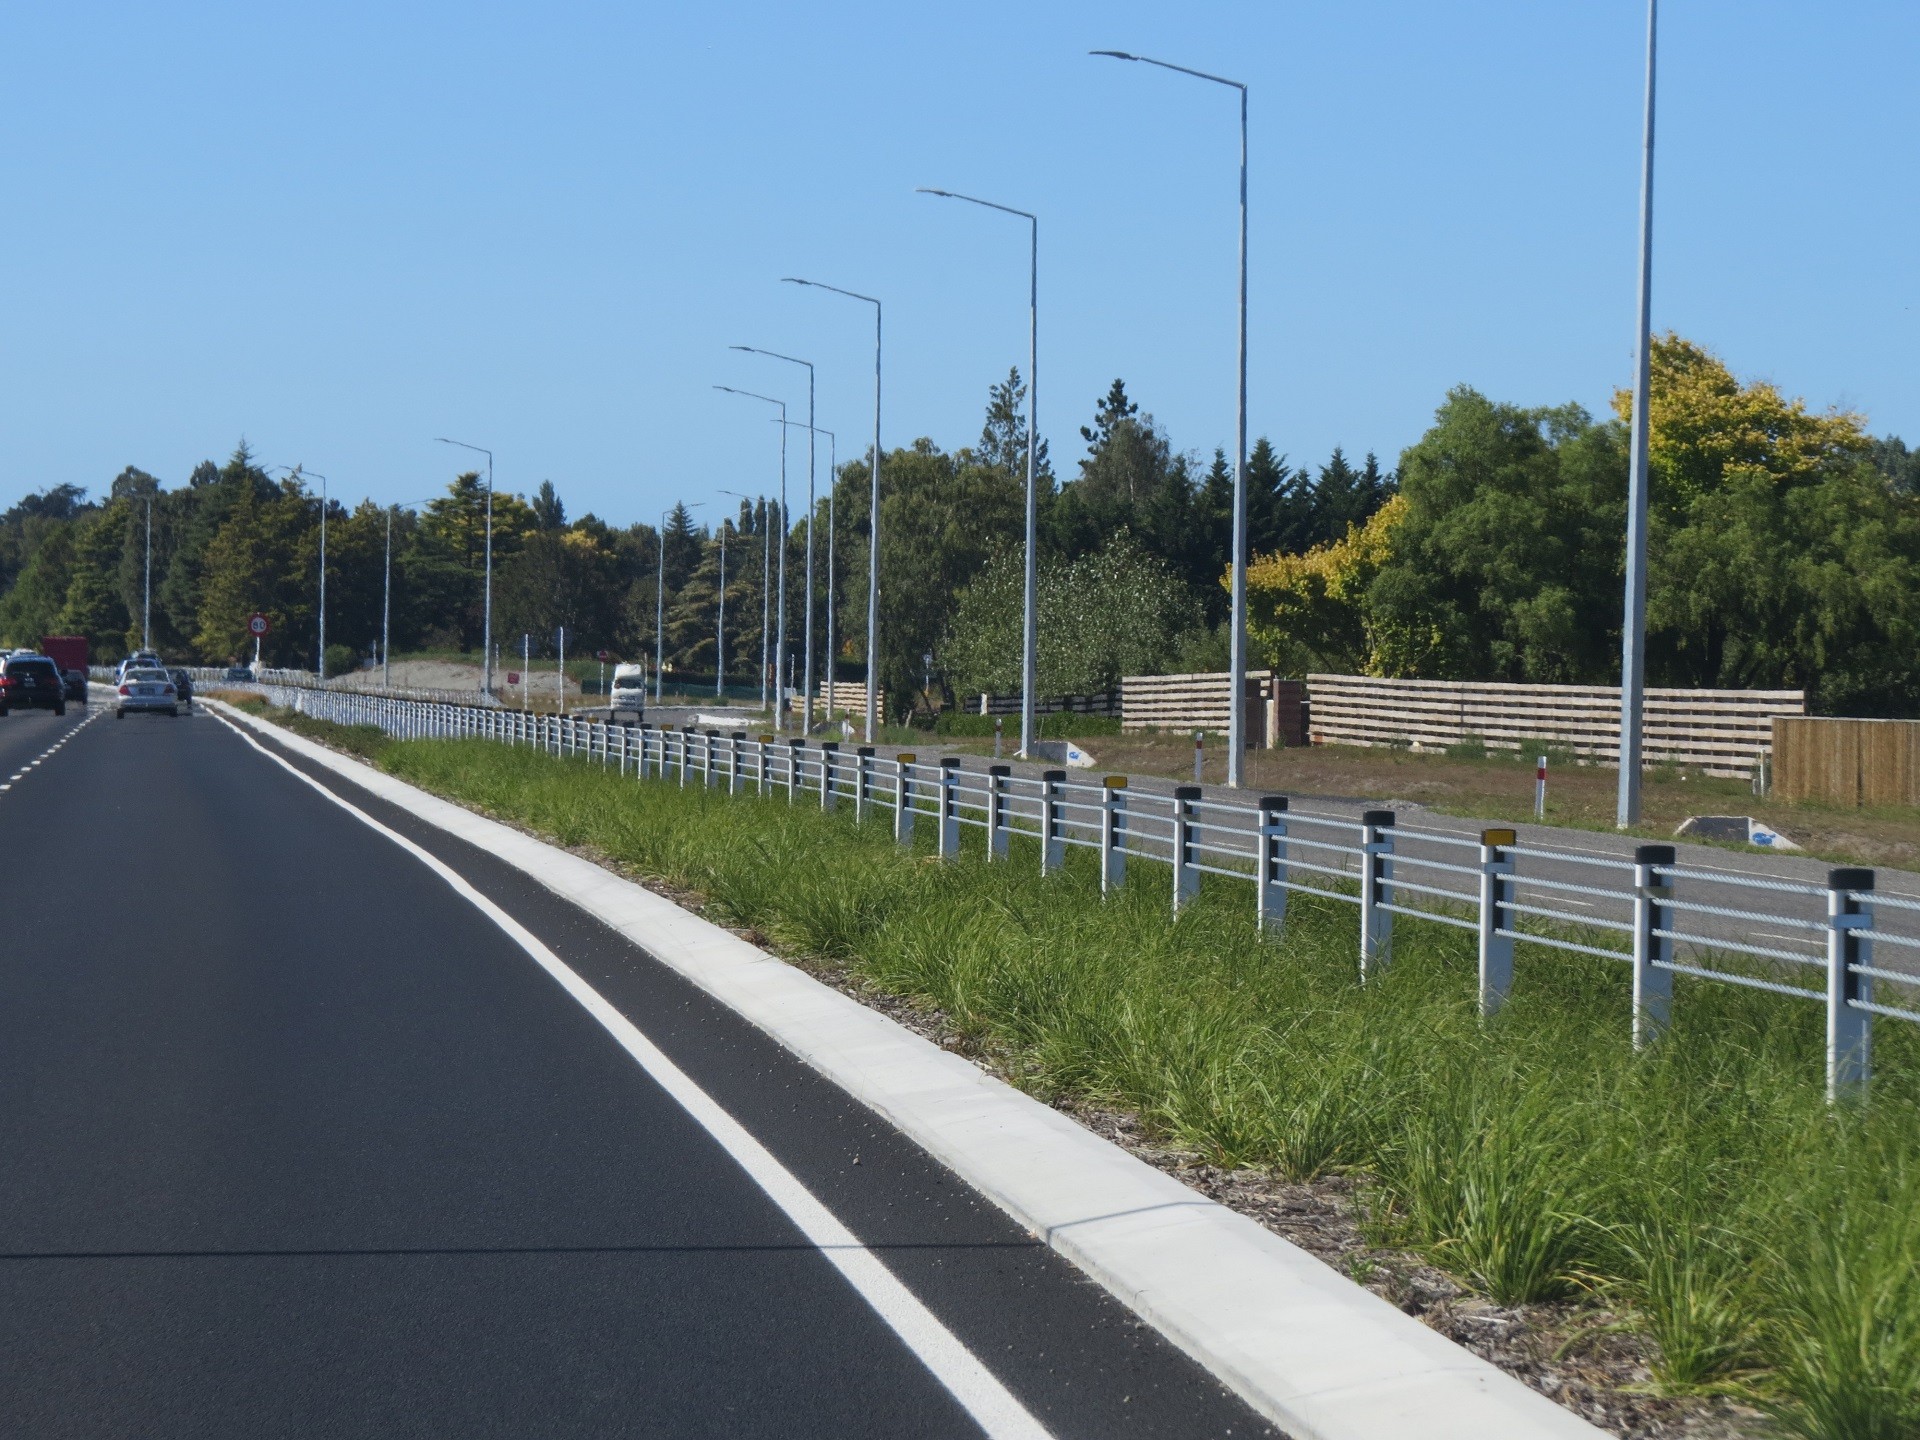 civil planting project on multi-lane road